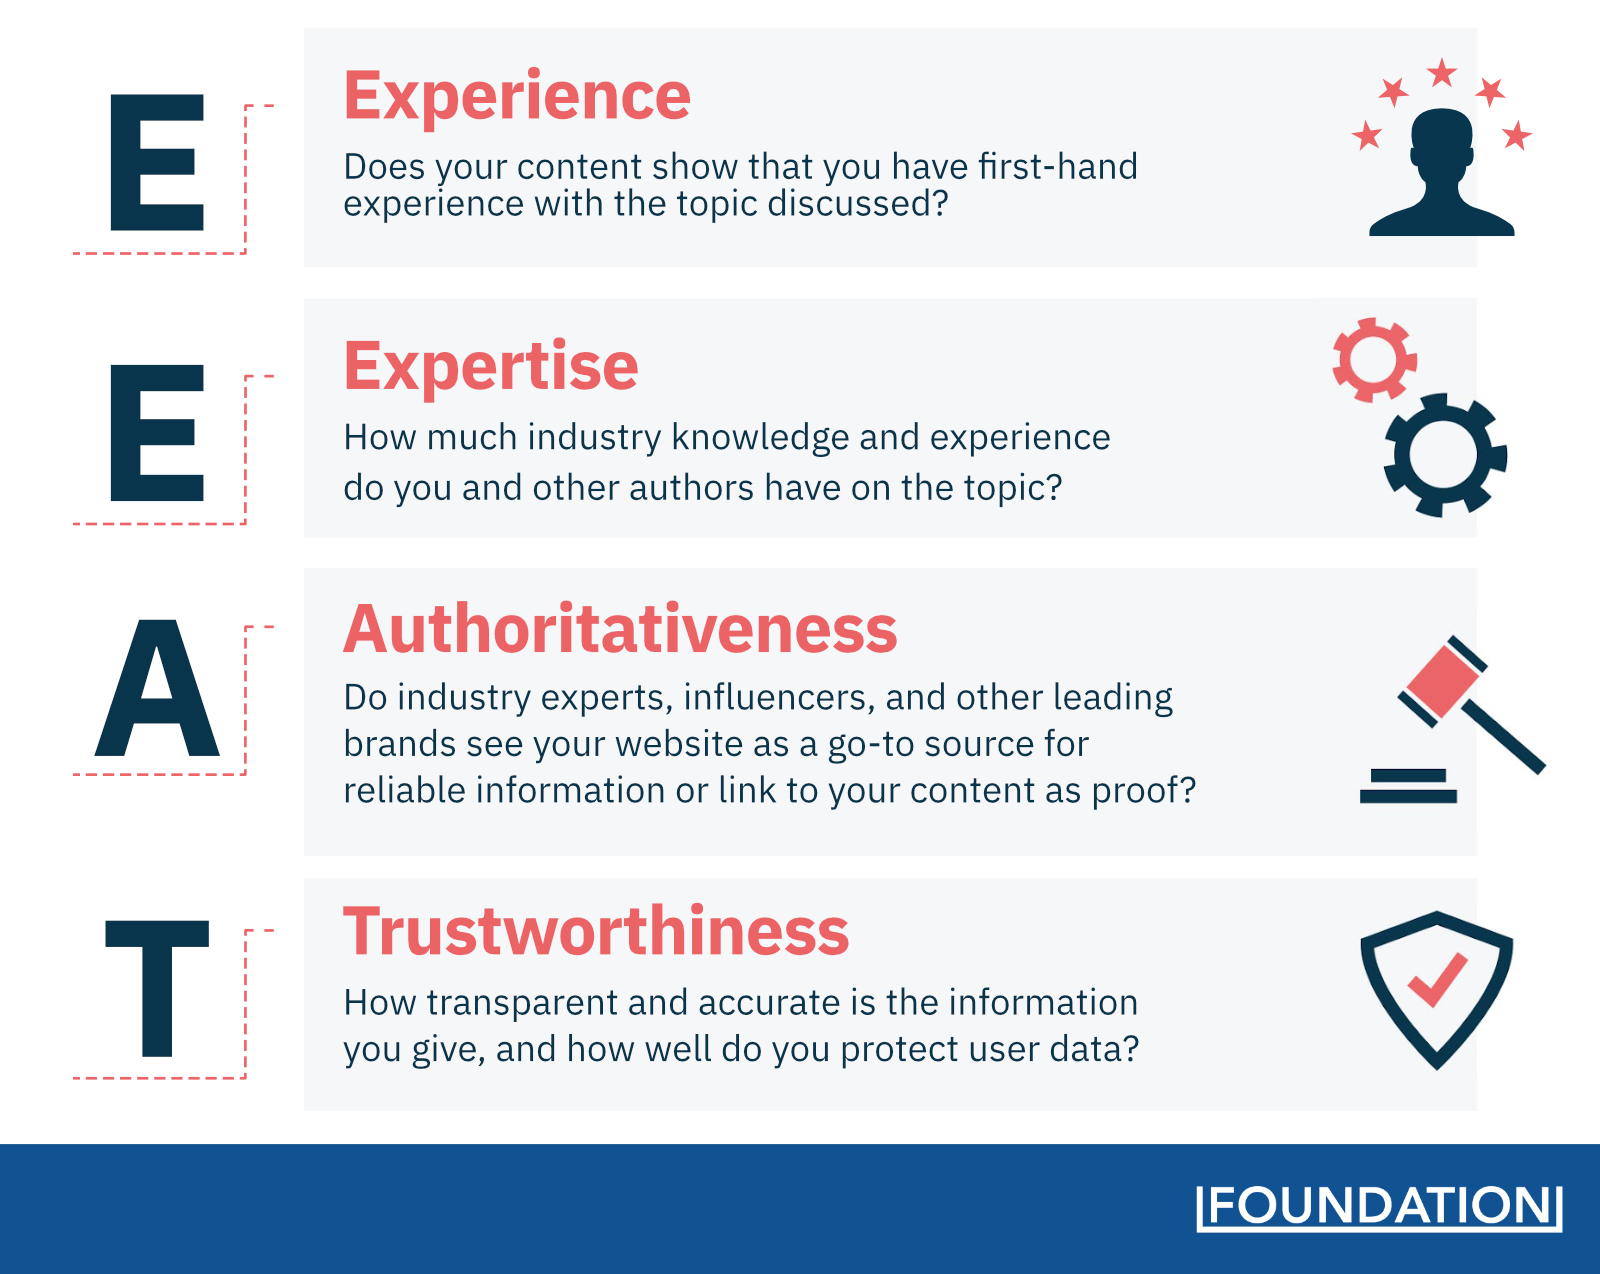 Experience, Expertise, Authoritativeness, and Trustworthiness (E-E-A-T)